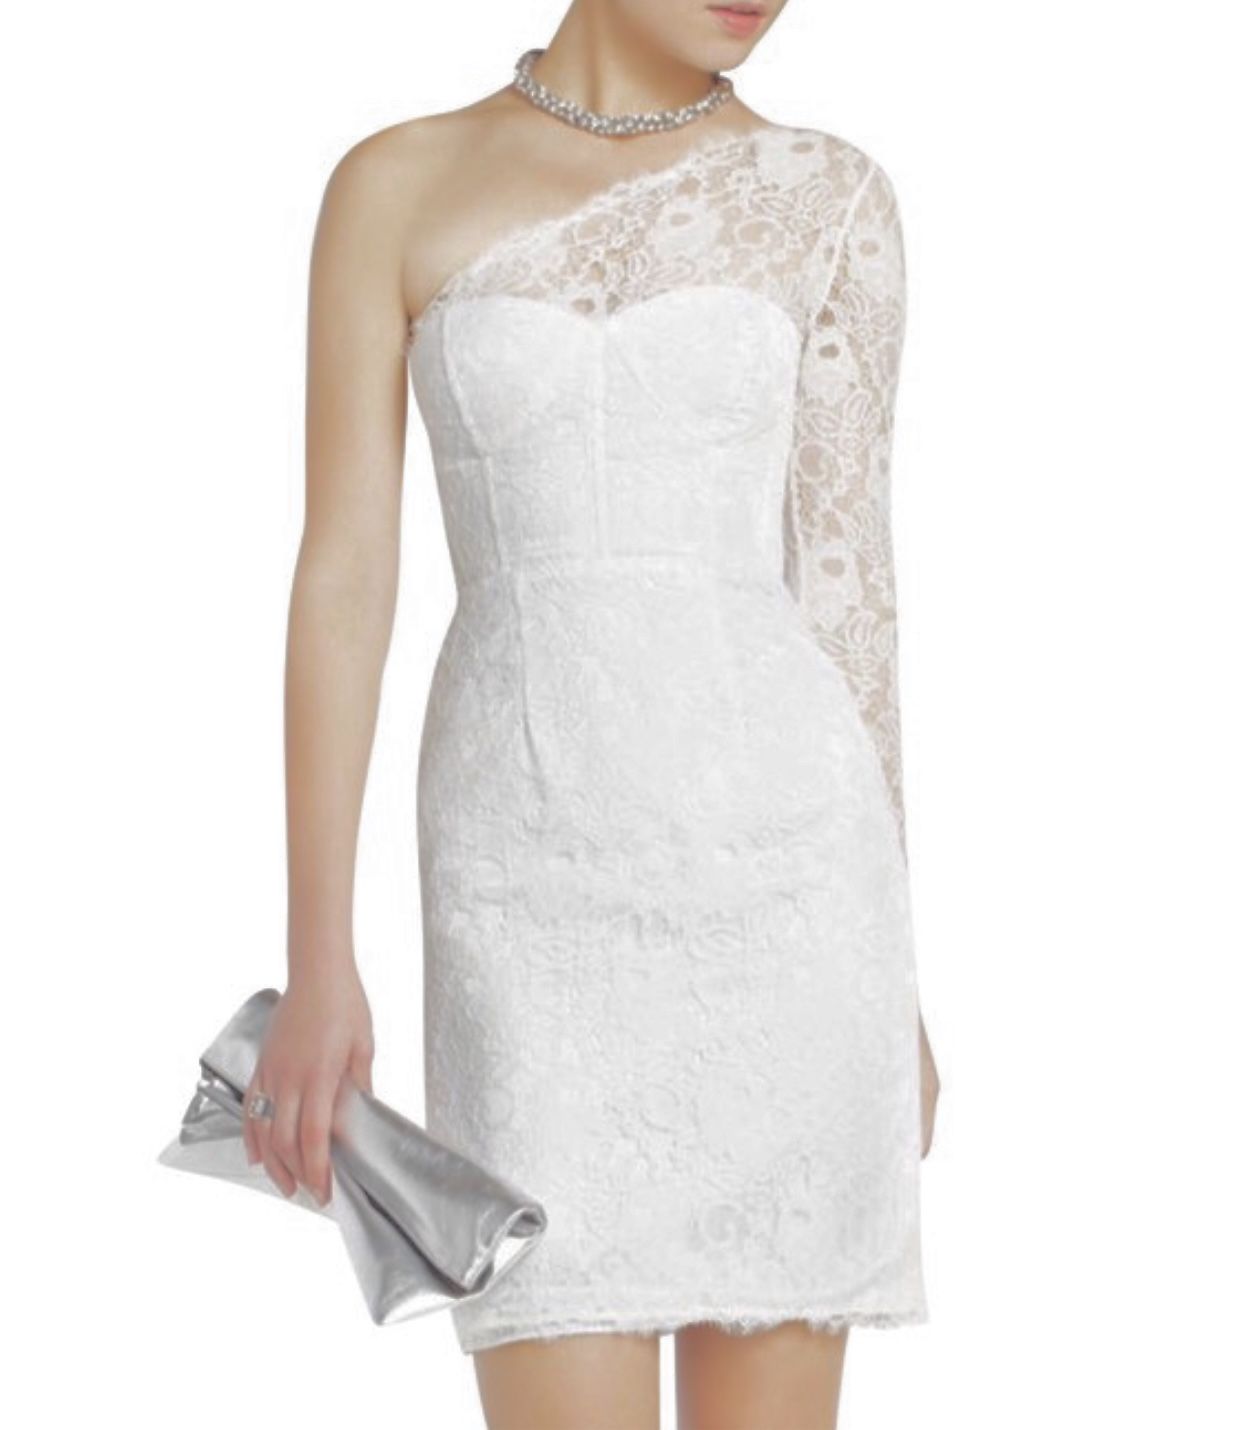 BCBG MaxAzria White Lace Cocktail Dress Size S/XS 